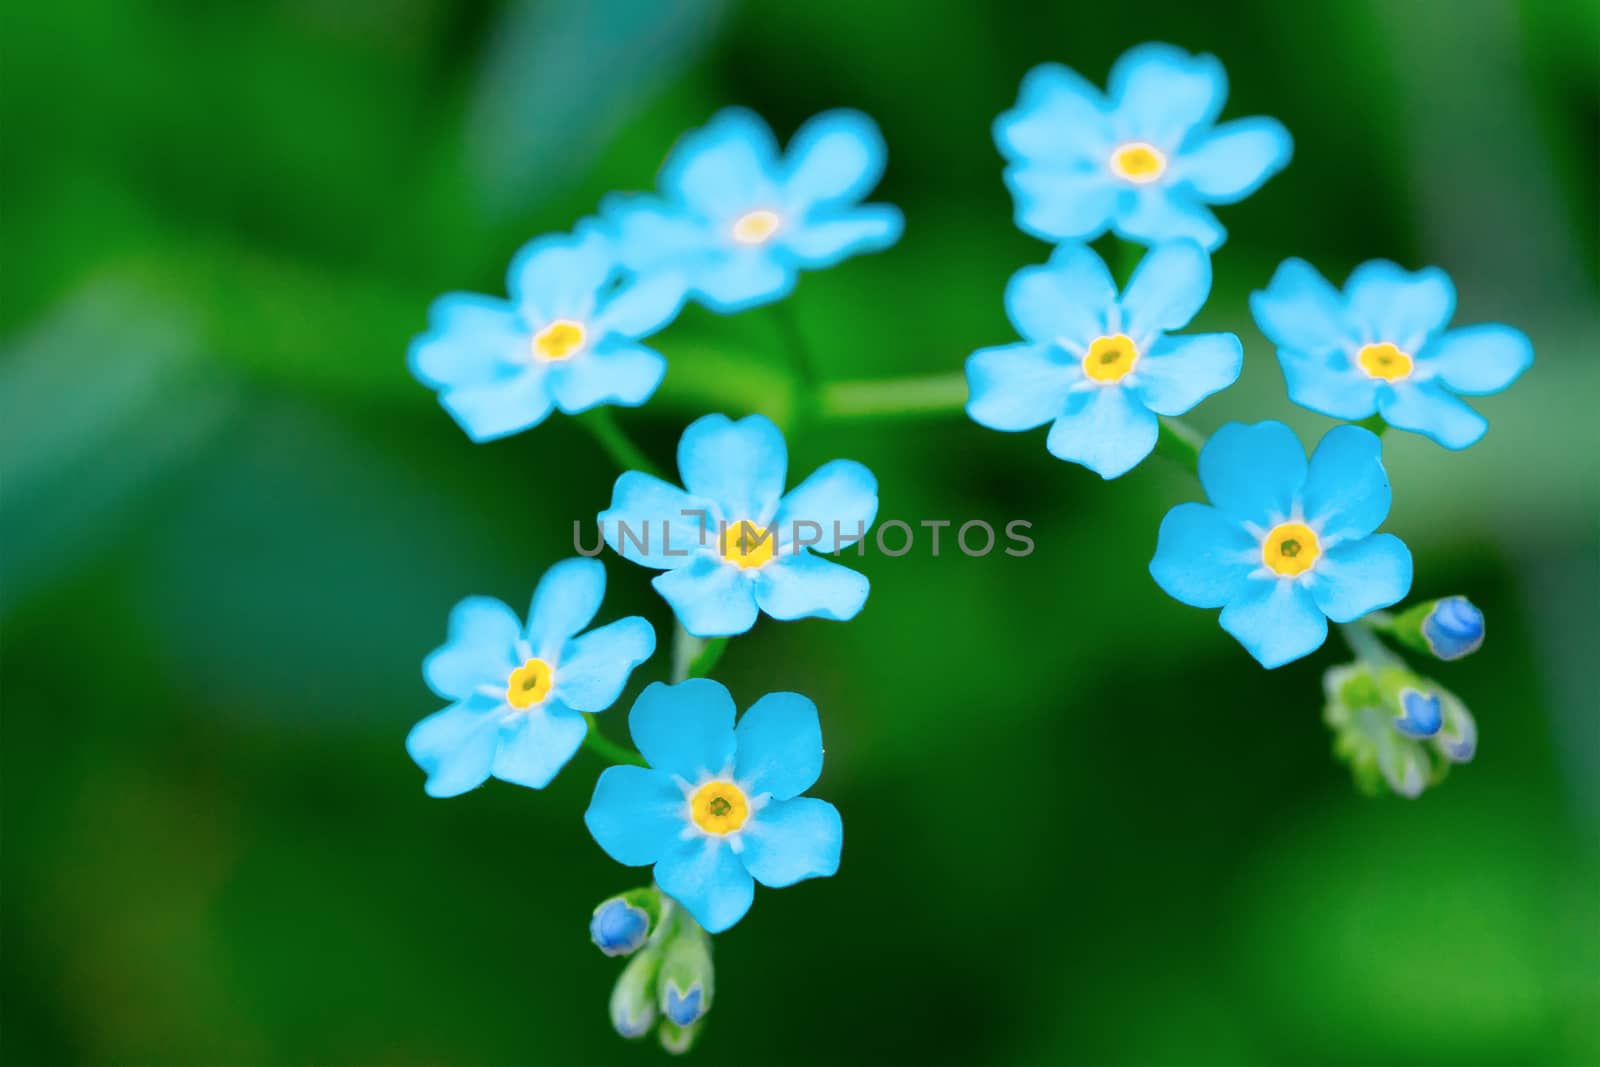 Nine sky-blue flowers plants on blurred green background